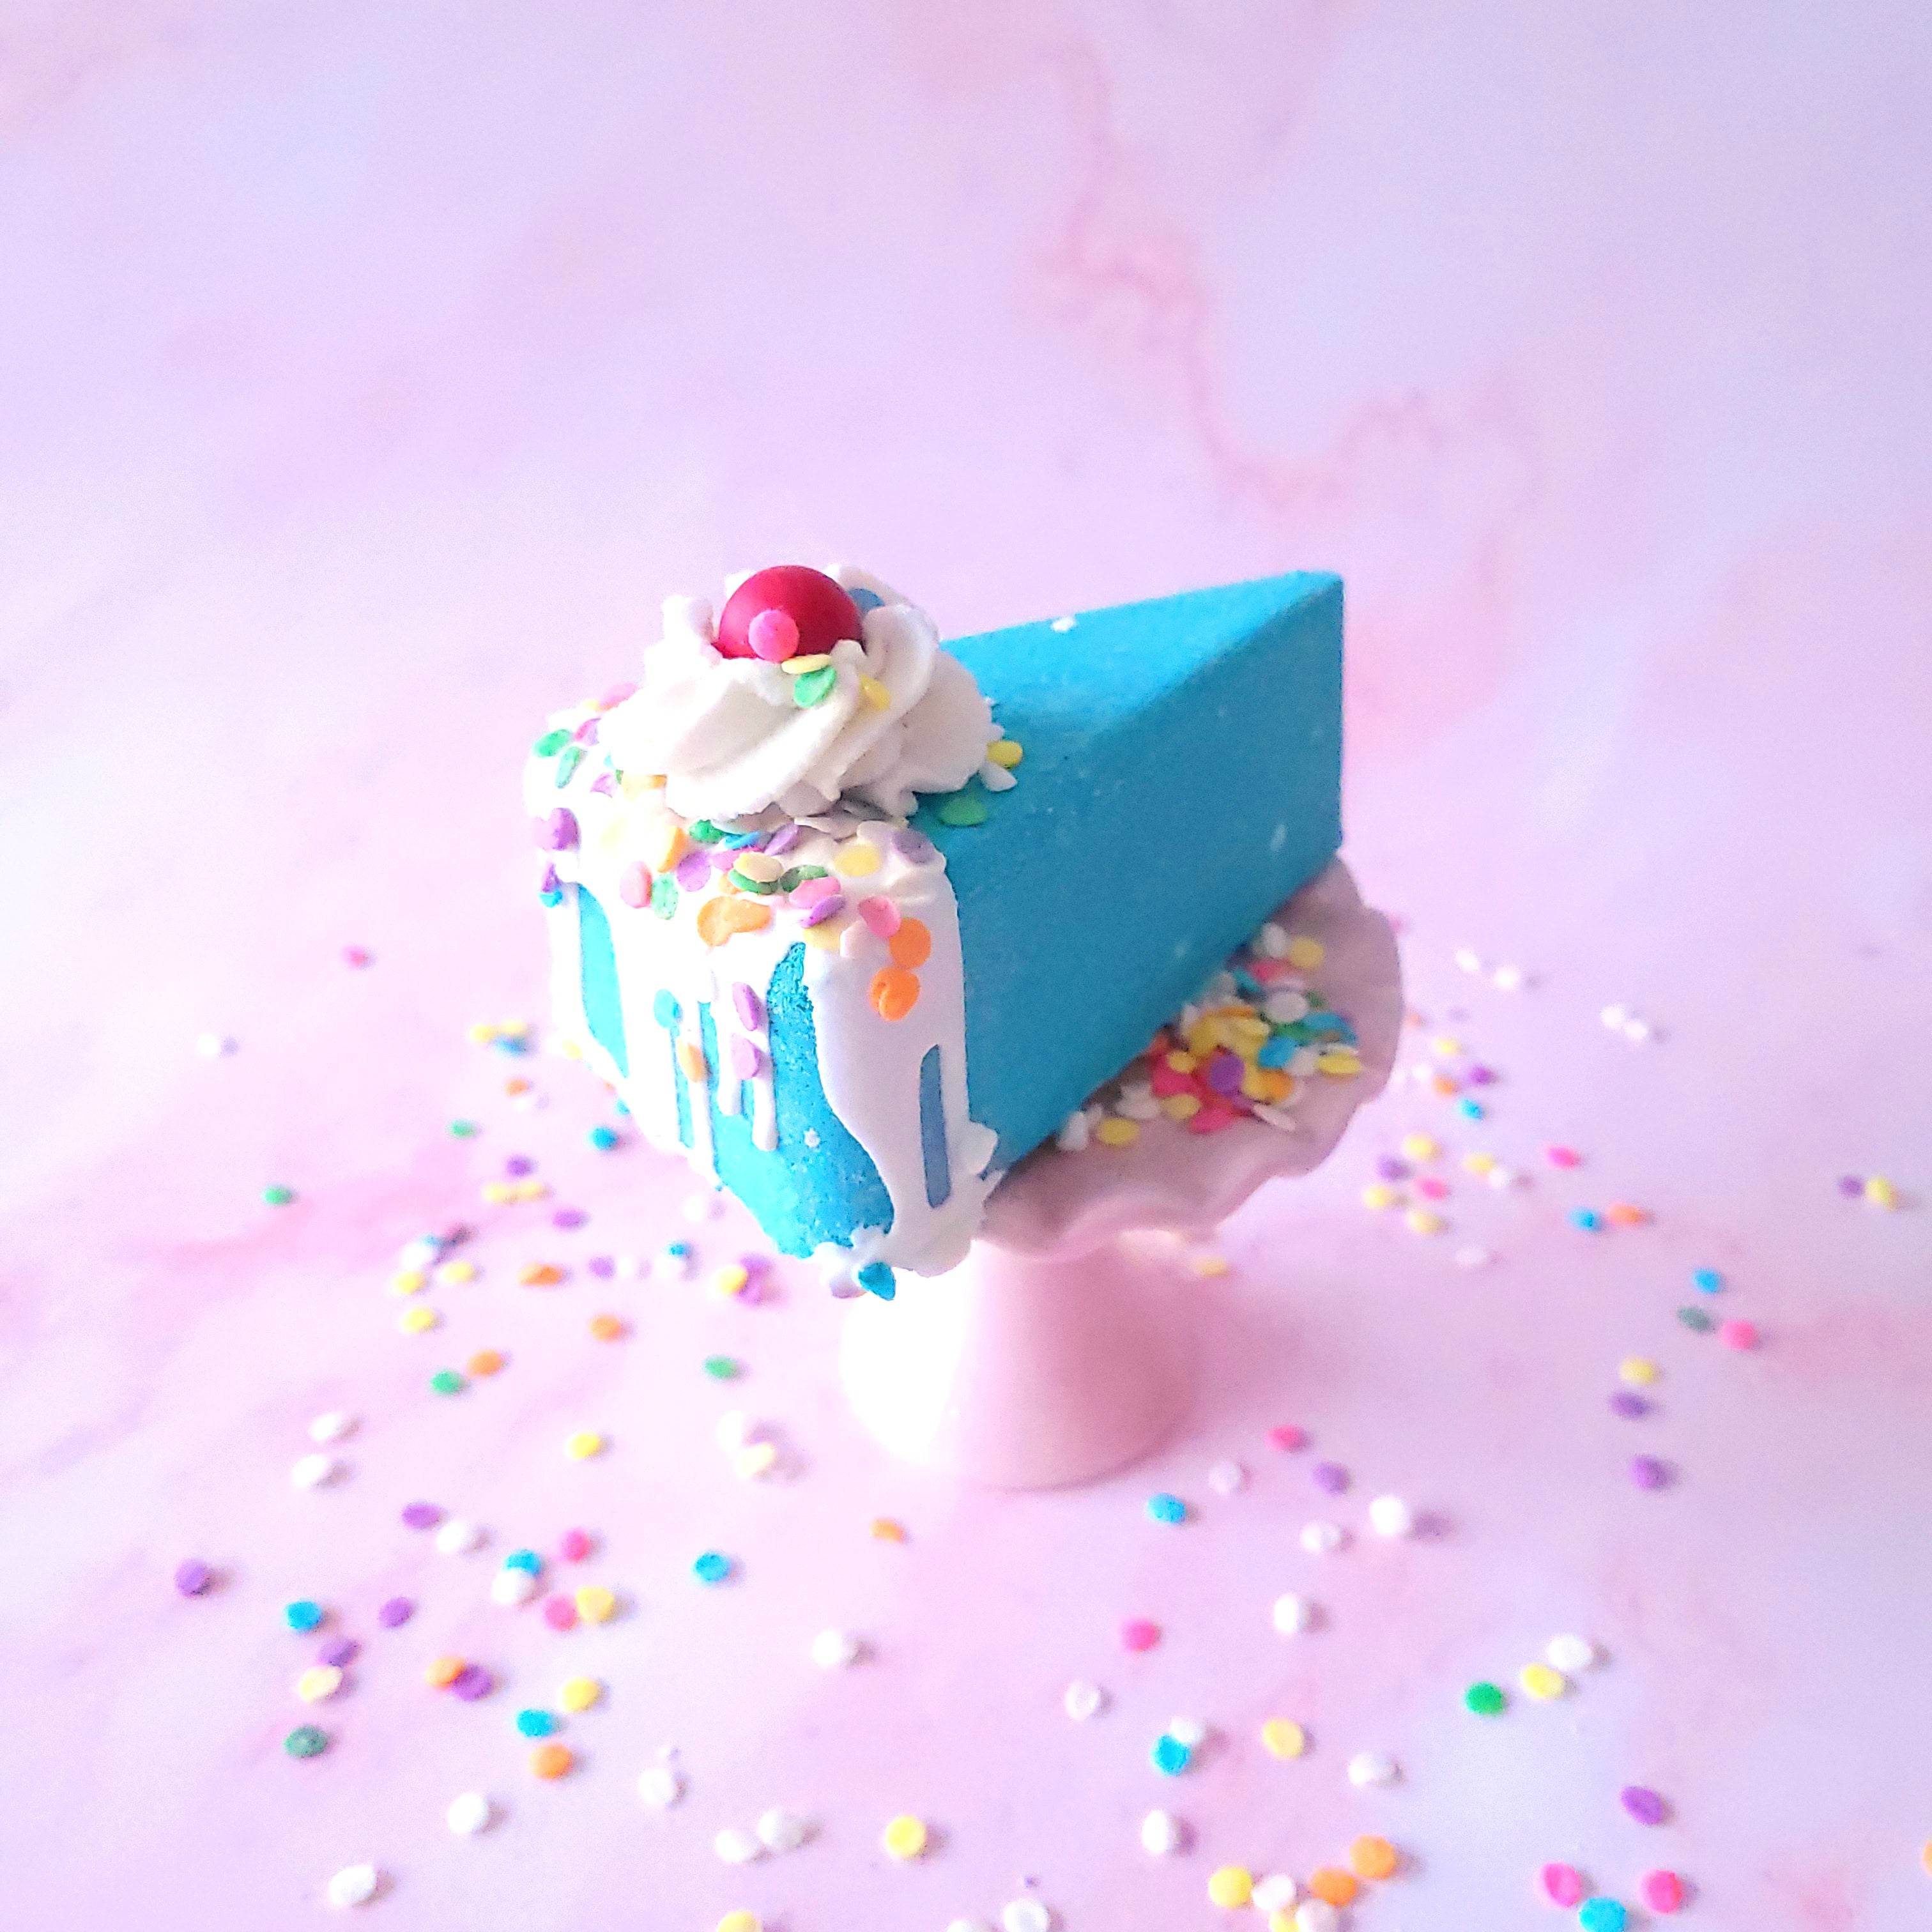 Bath Cake Delivery | Delicious Birthday Cakes in Bath – Cutter & Squidge